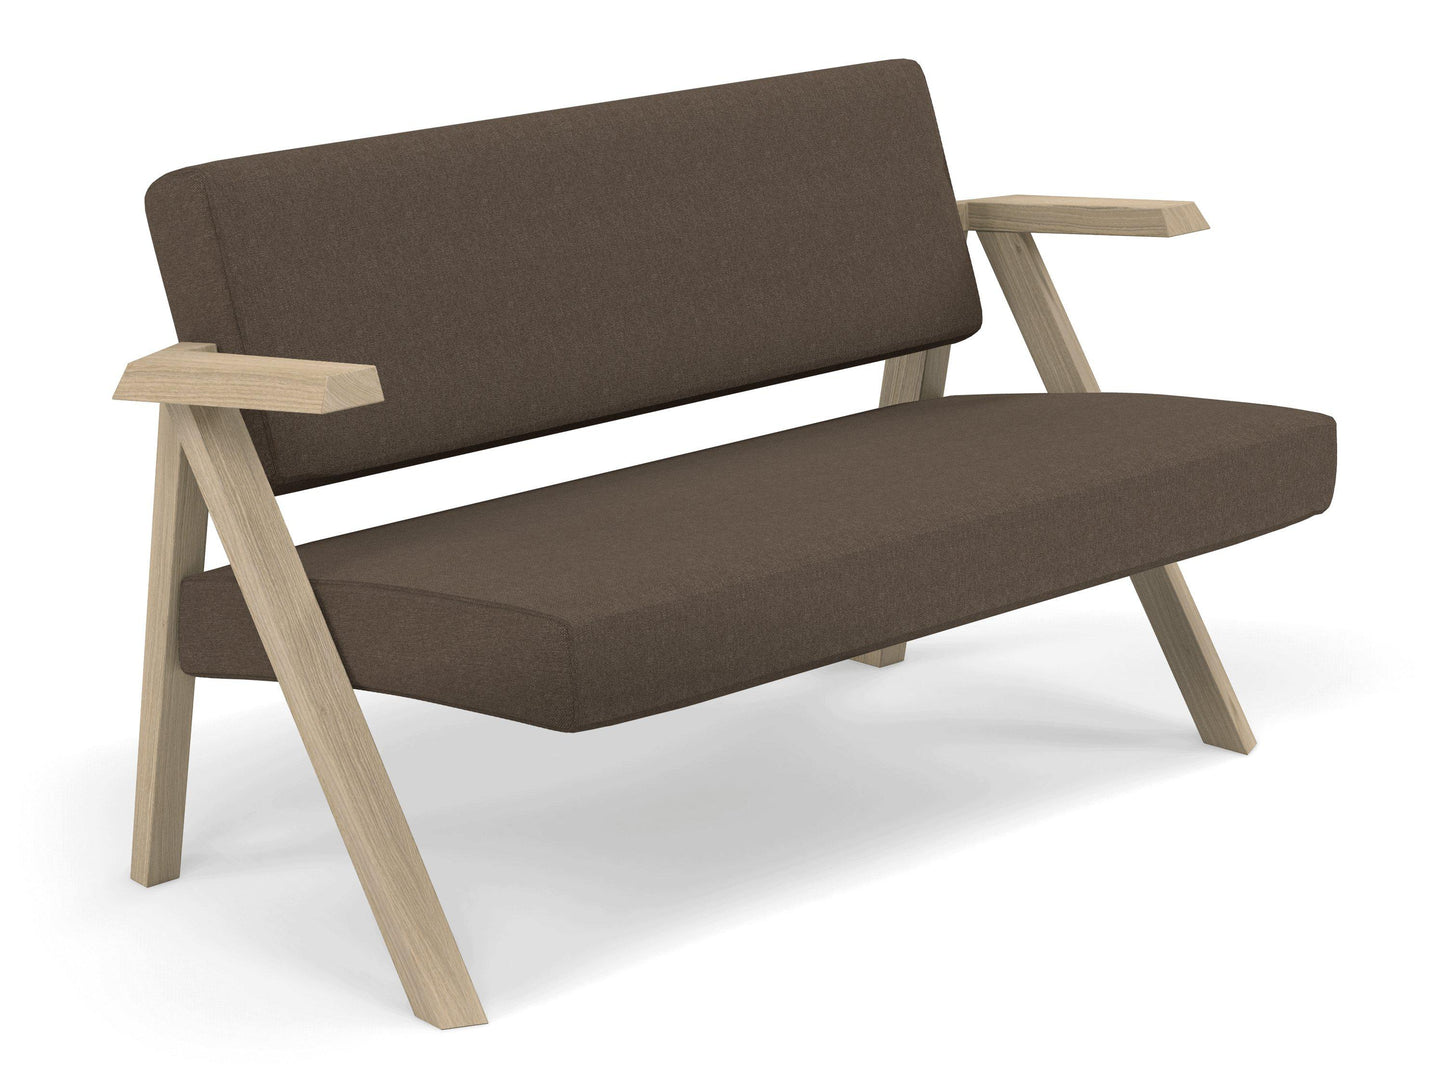 Classic Mid-century Design 2 Seater Sofa Armchair in Coffee Brown Fabric-Distinct Designs (London) Ltd